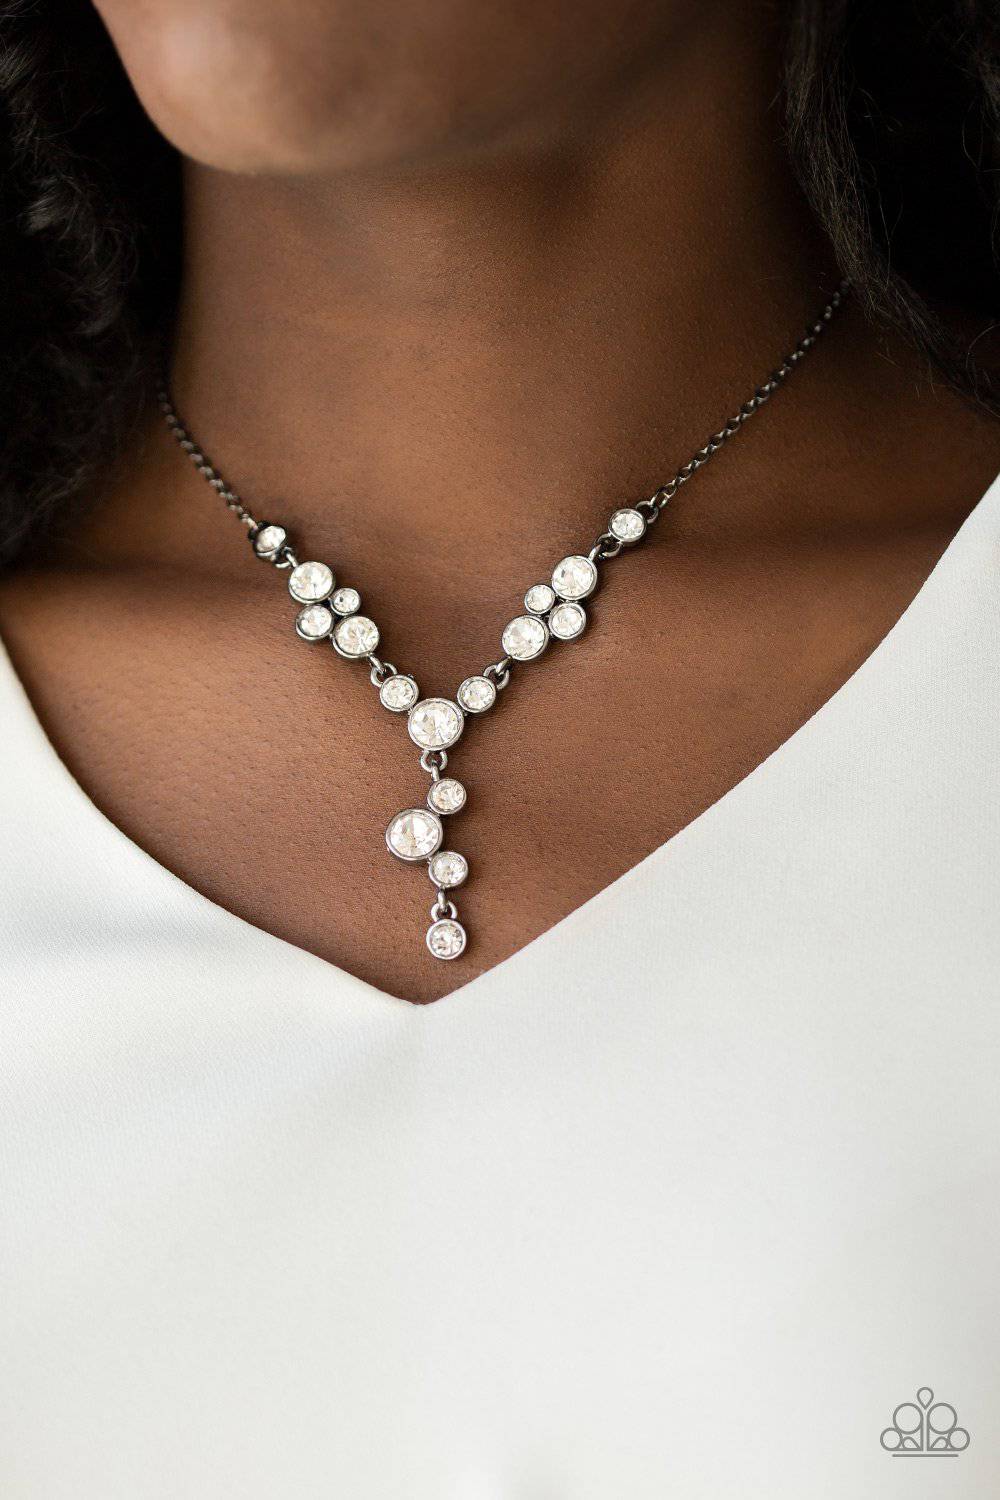 Five-Star Starlet - Black Rhinestone Necklace - Paparazzi Accessories - GlaMarous Titi Jewels